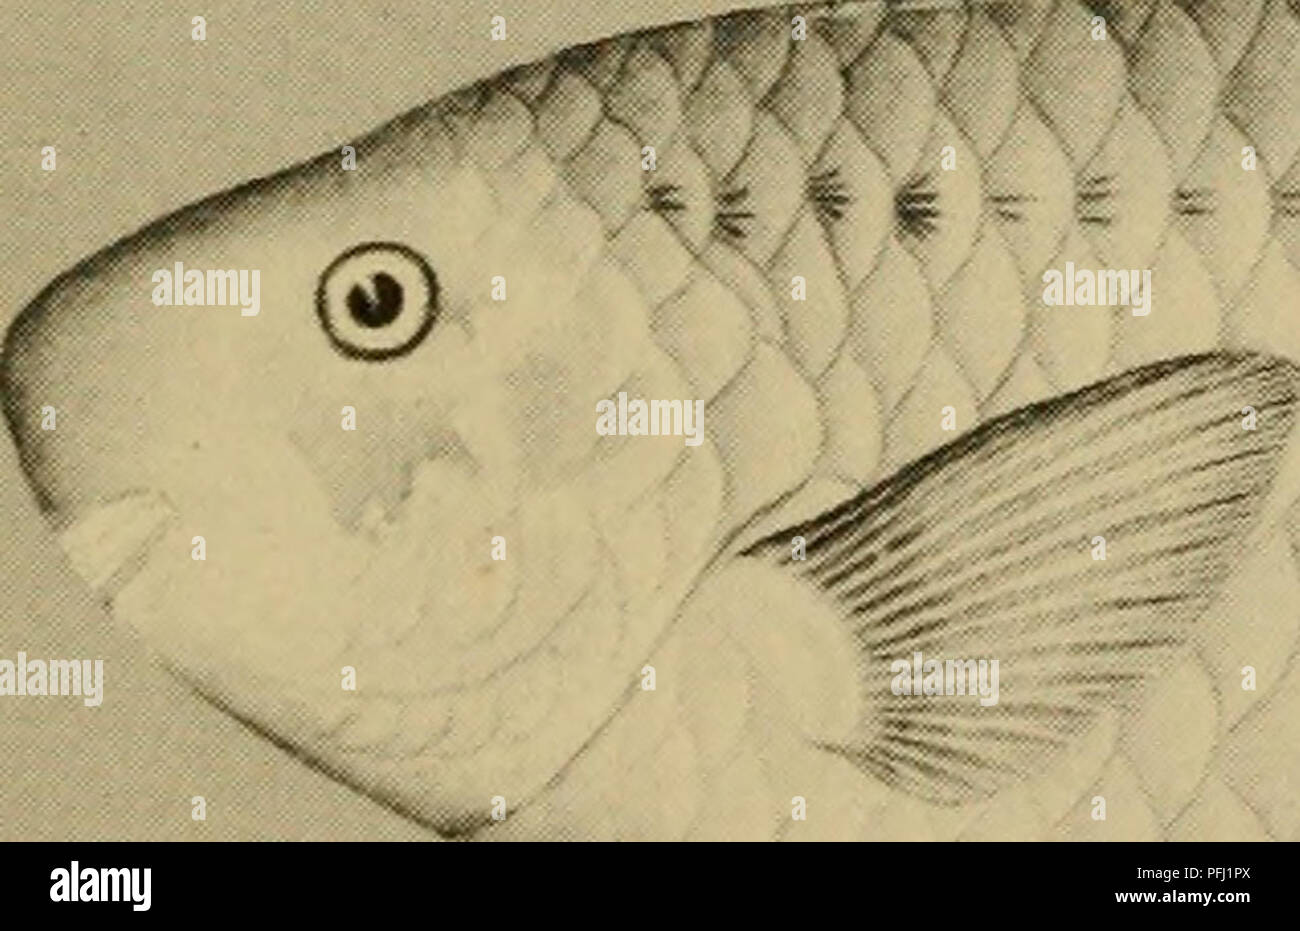 Dangerous marine animals. Marine animals. Sb'&quot; / U' / w%^- ^ J &quot;â  â iV. *5* Fig. 82. Top: Snapper, Monotaxis grandoculis (Forskal). (From  Hiyama) Center: Chinaman Fish, Paradicichthys venenatus Whitley (